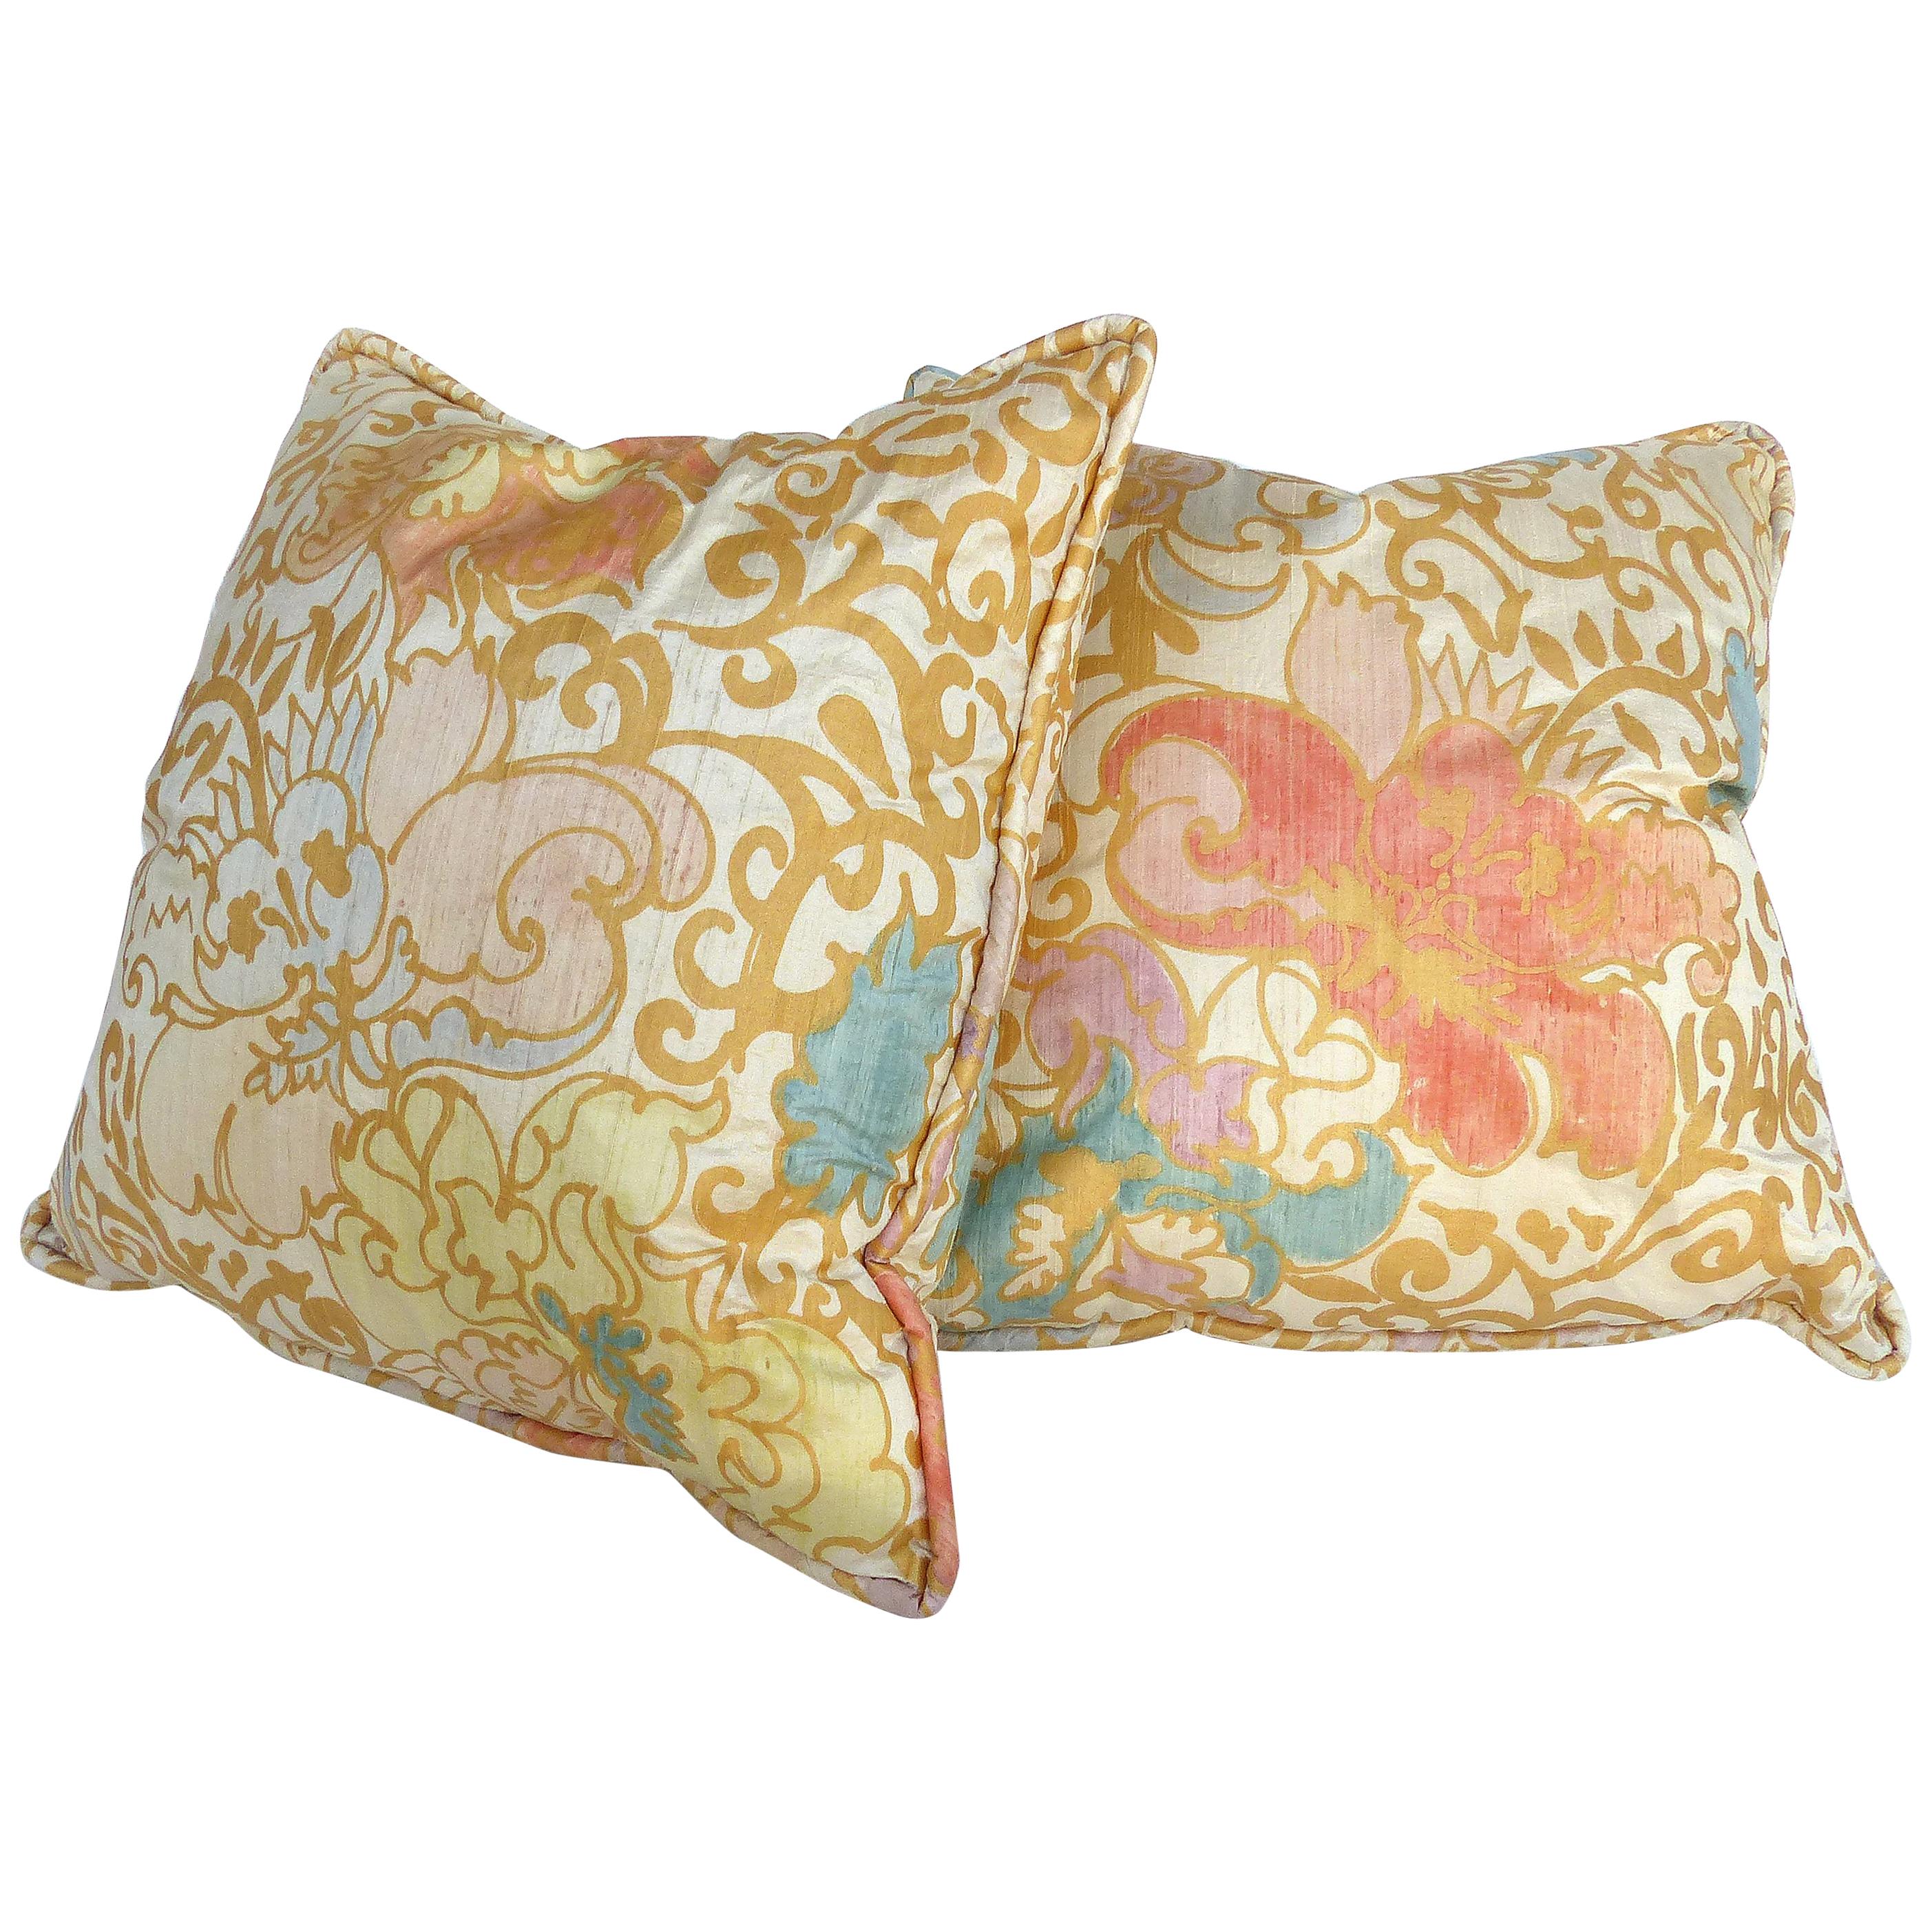 Barbara Beckmann Hand-Printed Silk Pillows, Pairs Available